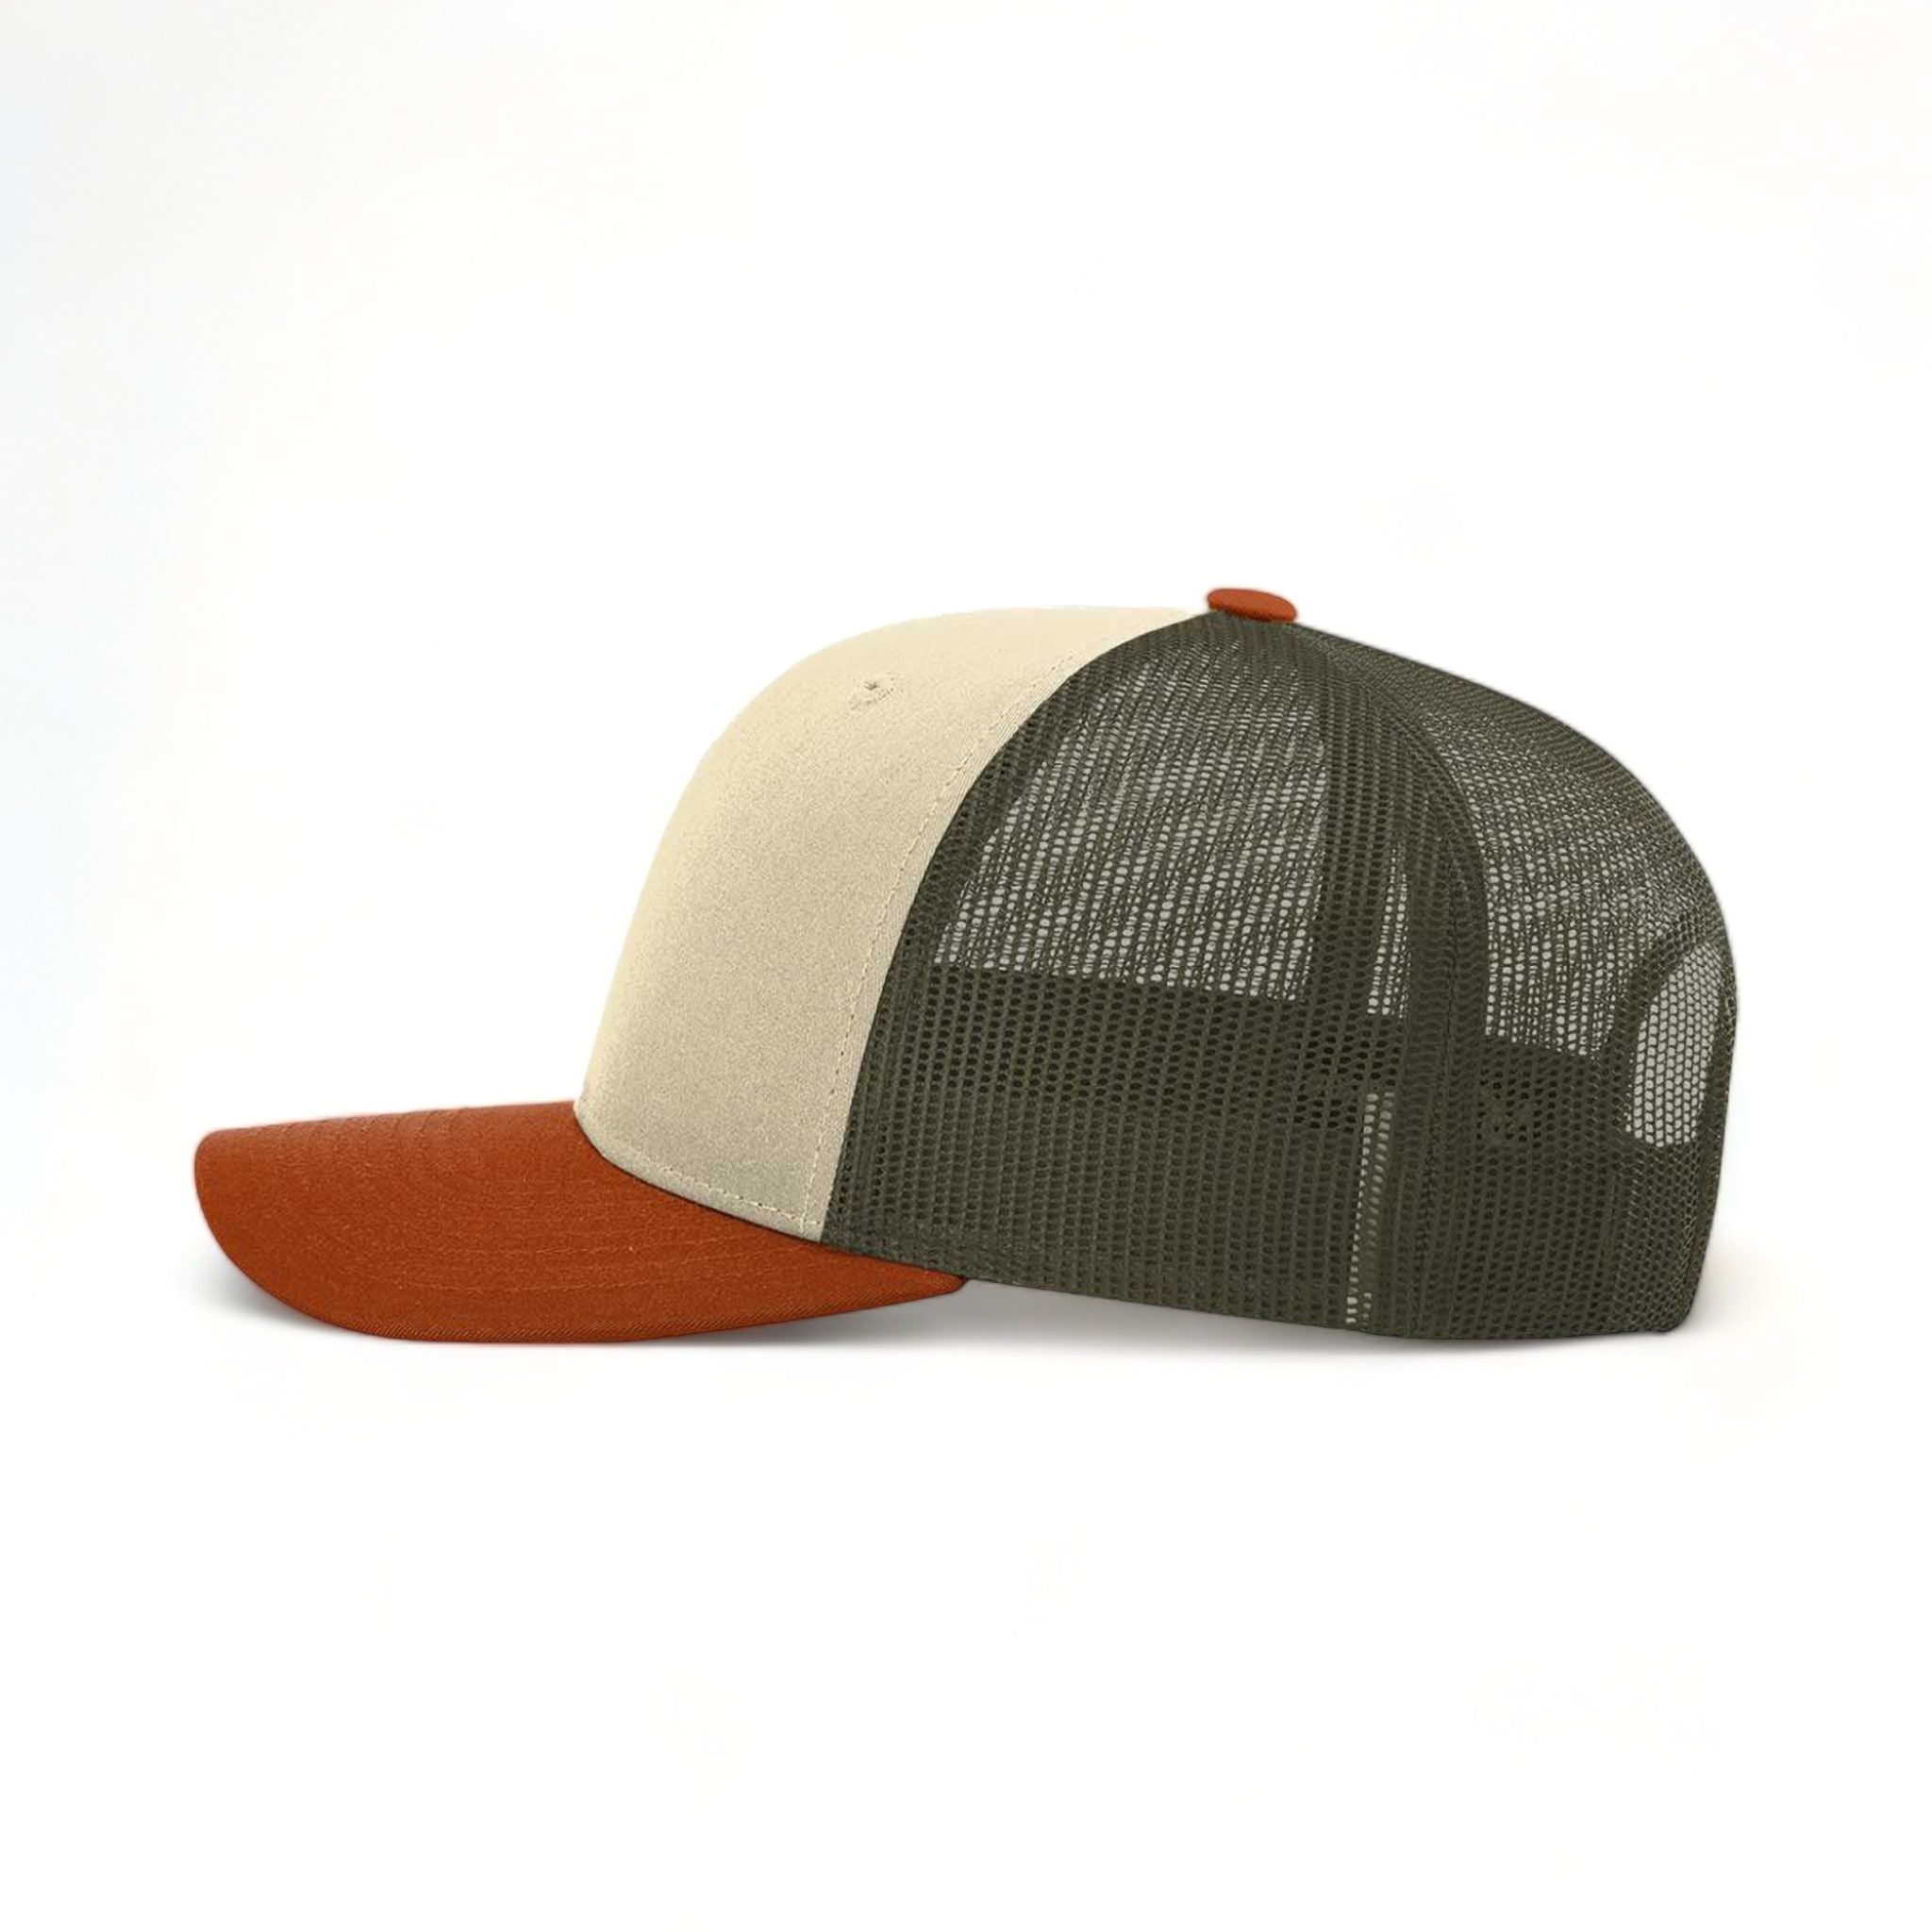 Side view of Richardson 115 custom hat in cream, loden green and dark orange